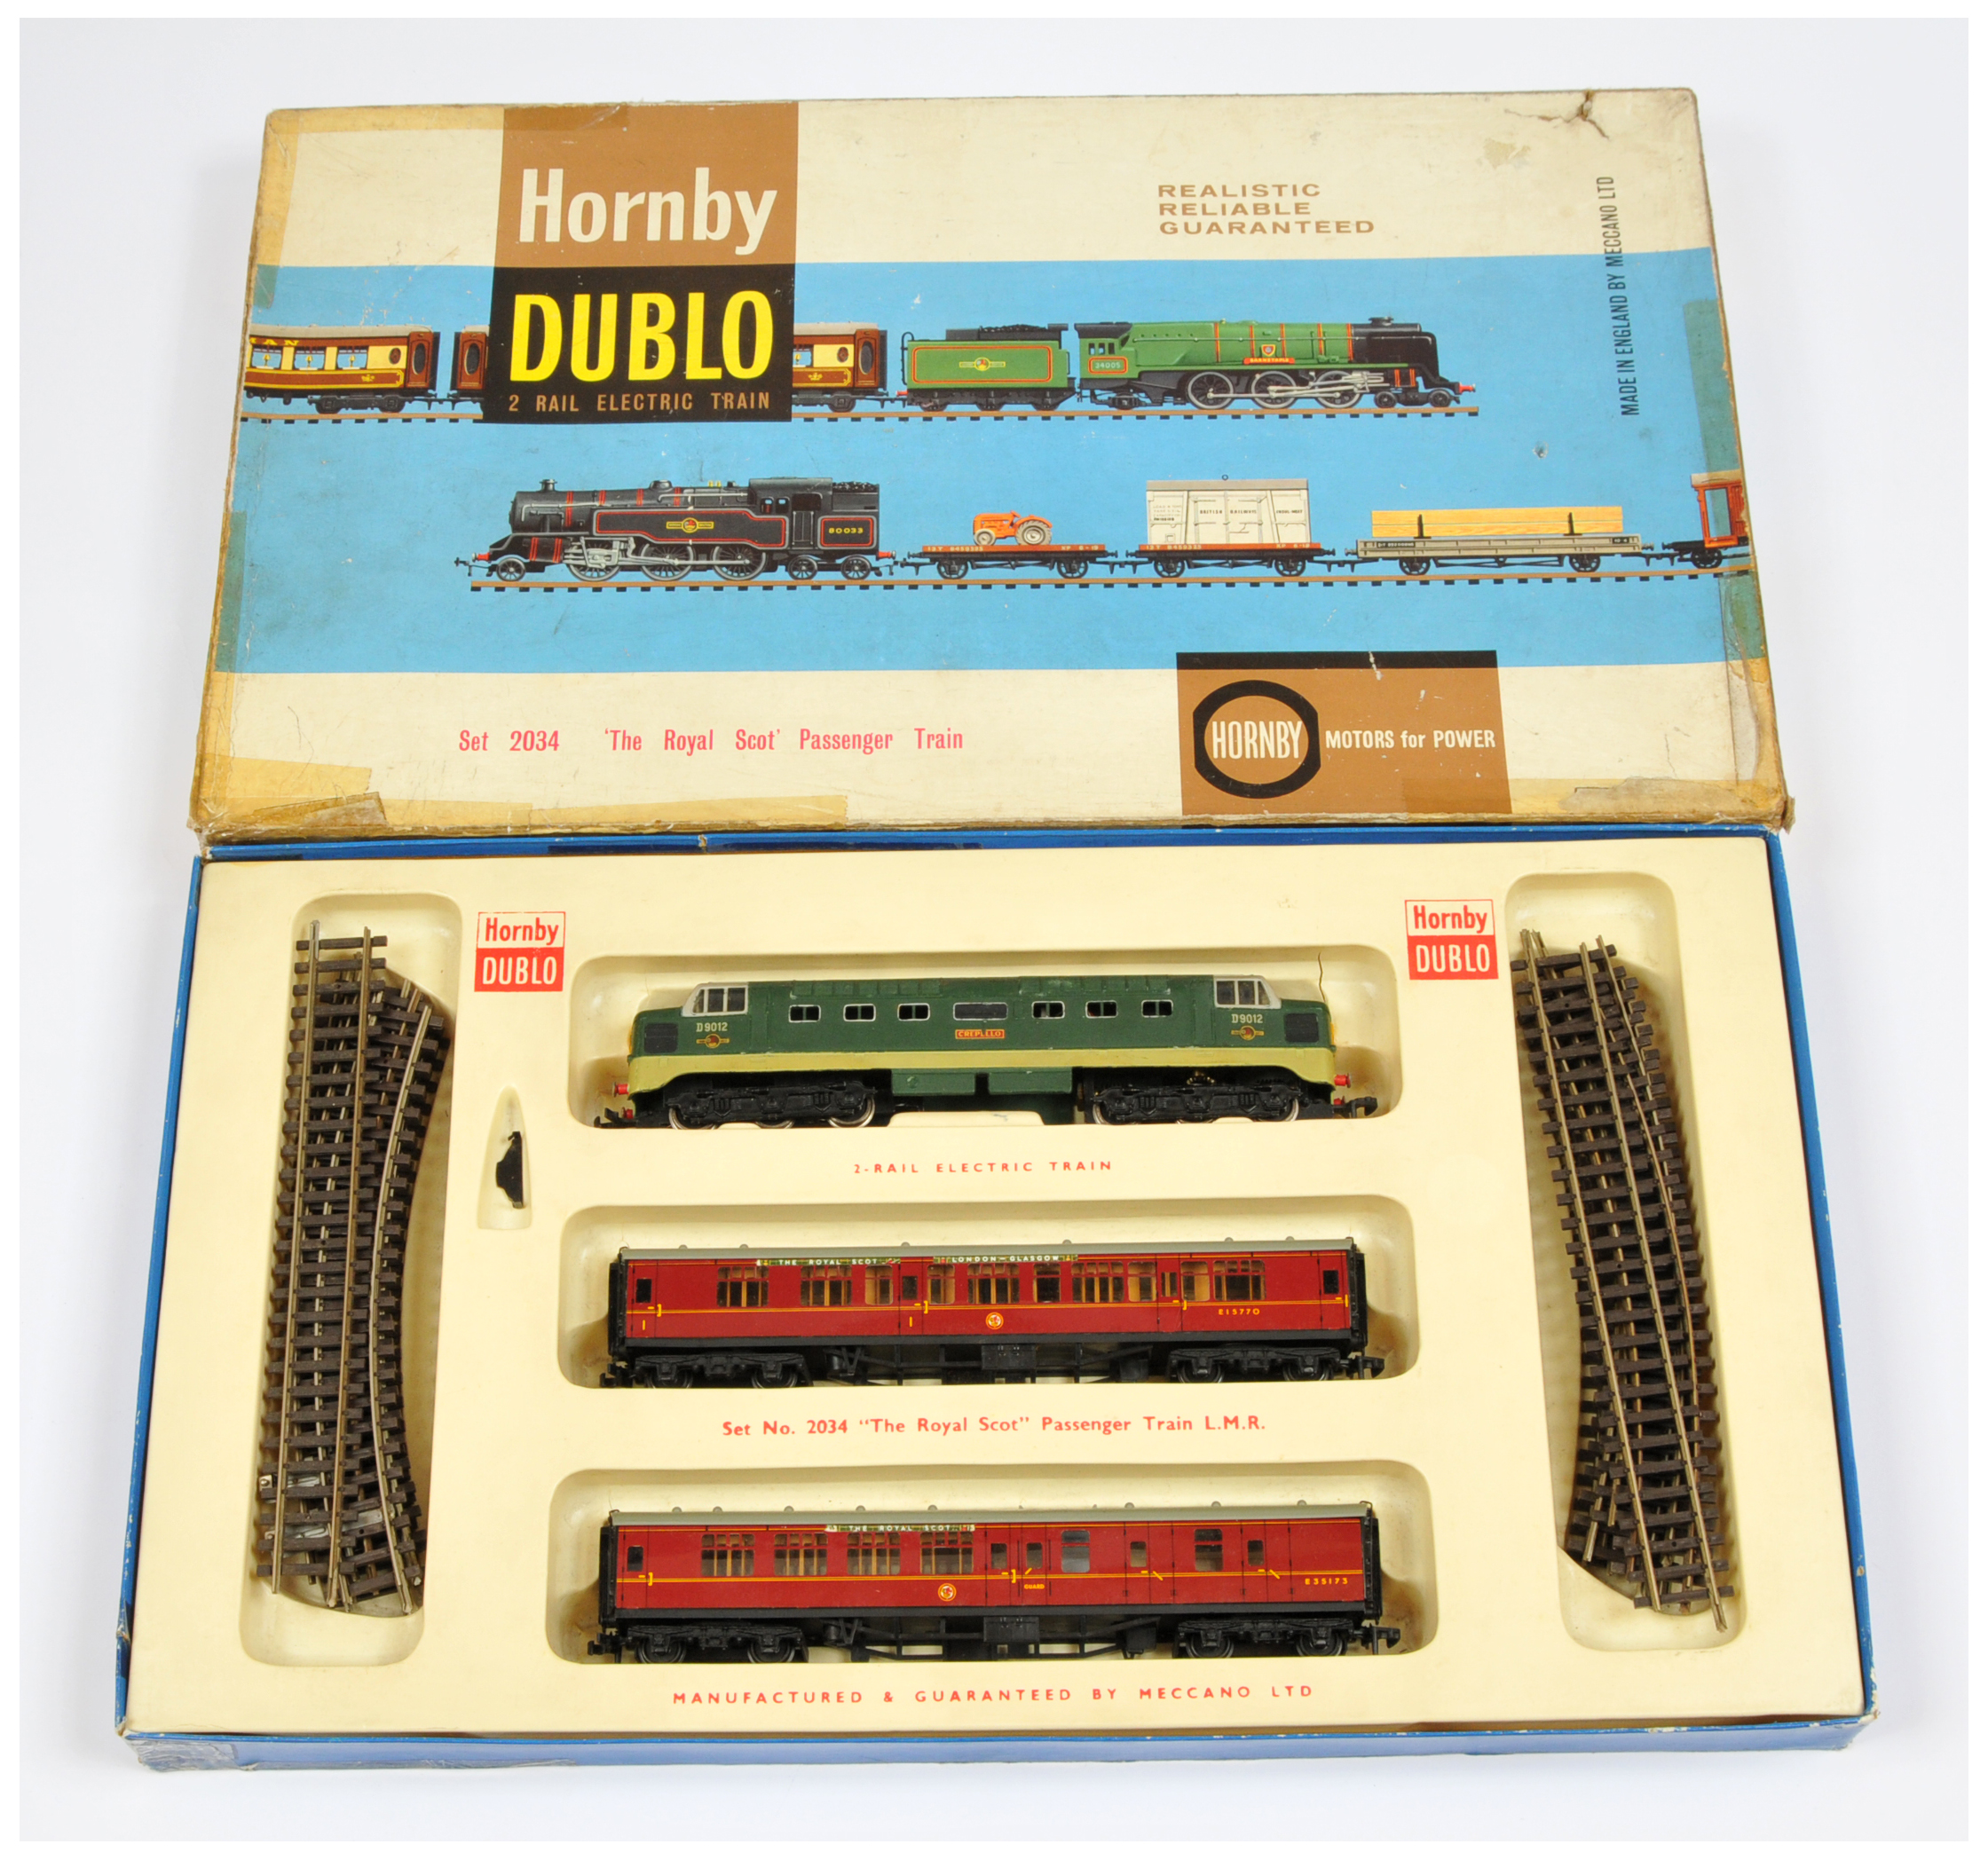 Hornby Dublo 2-rail 2034 "The Royal Scot" Passenger Set 